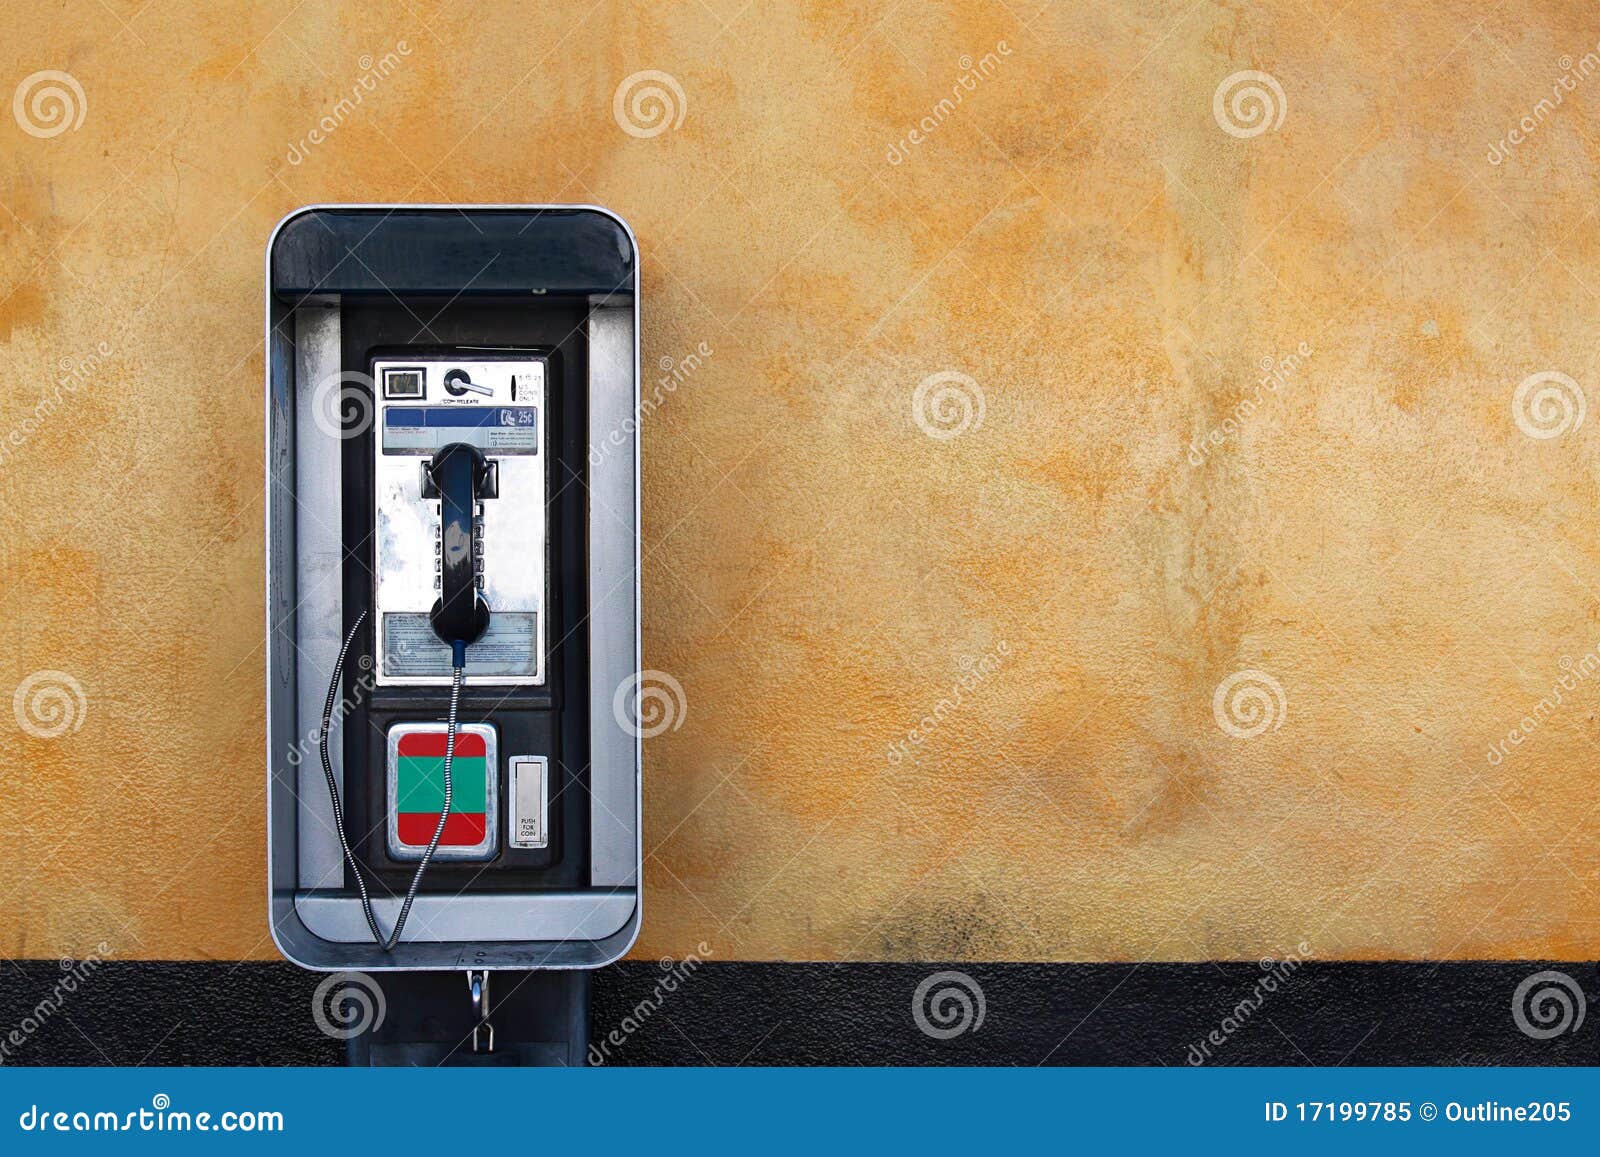 public pay phone